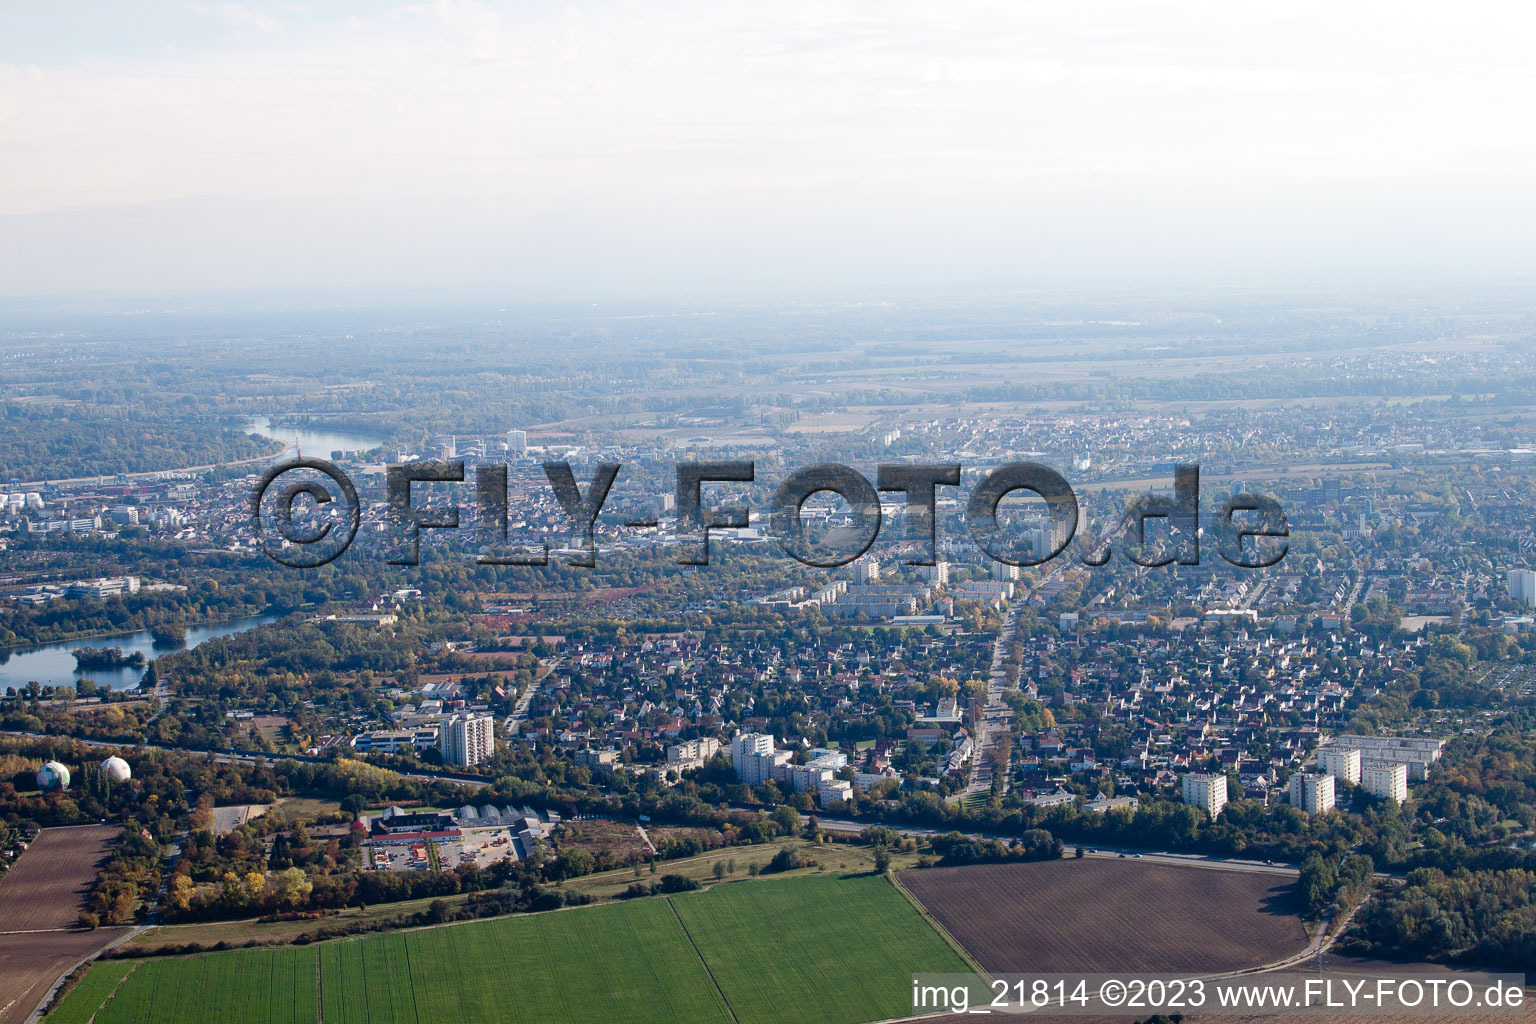 District Gartenstadt in Ludwigshafen am Rhein in the state Rhineland-Palatinate, Germany seen from above